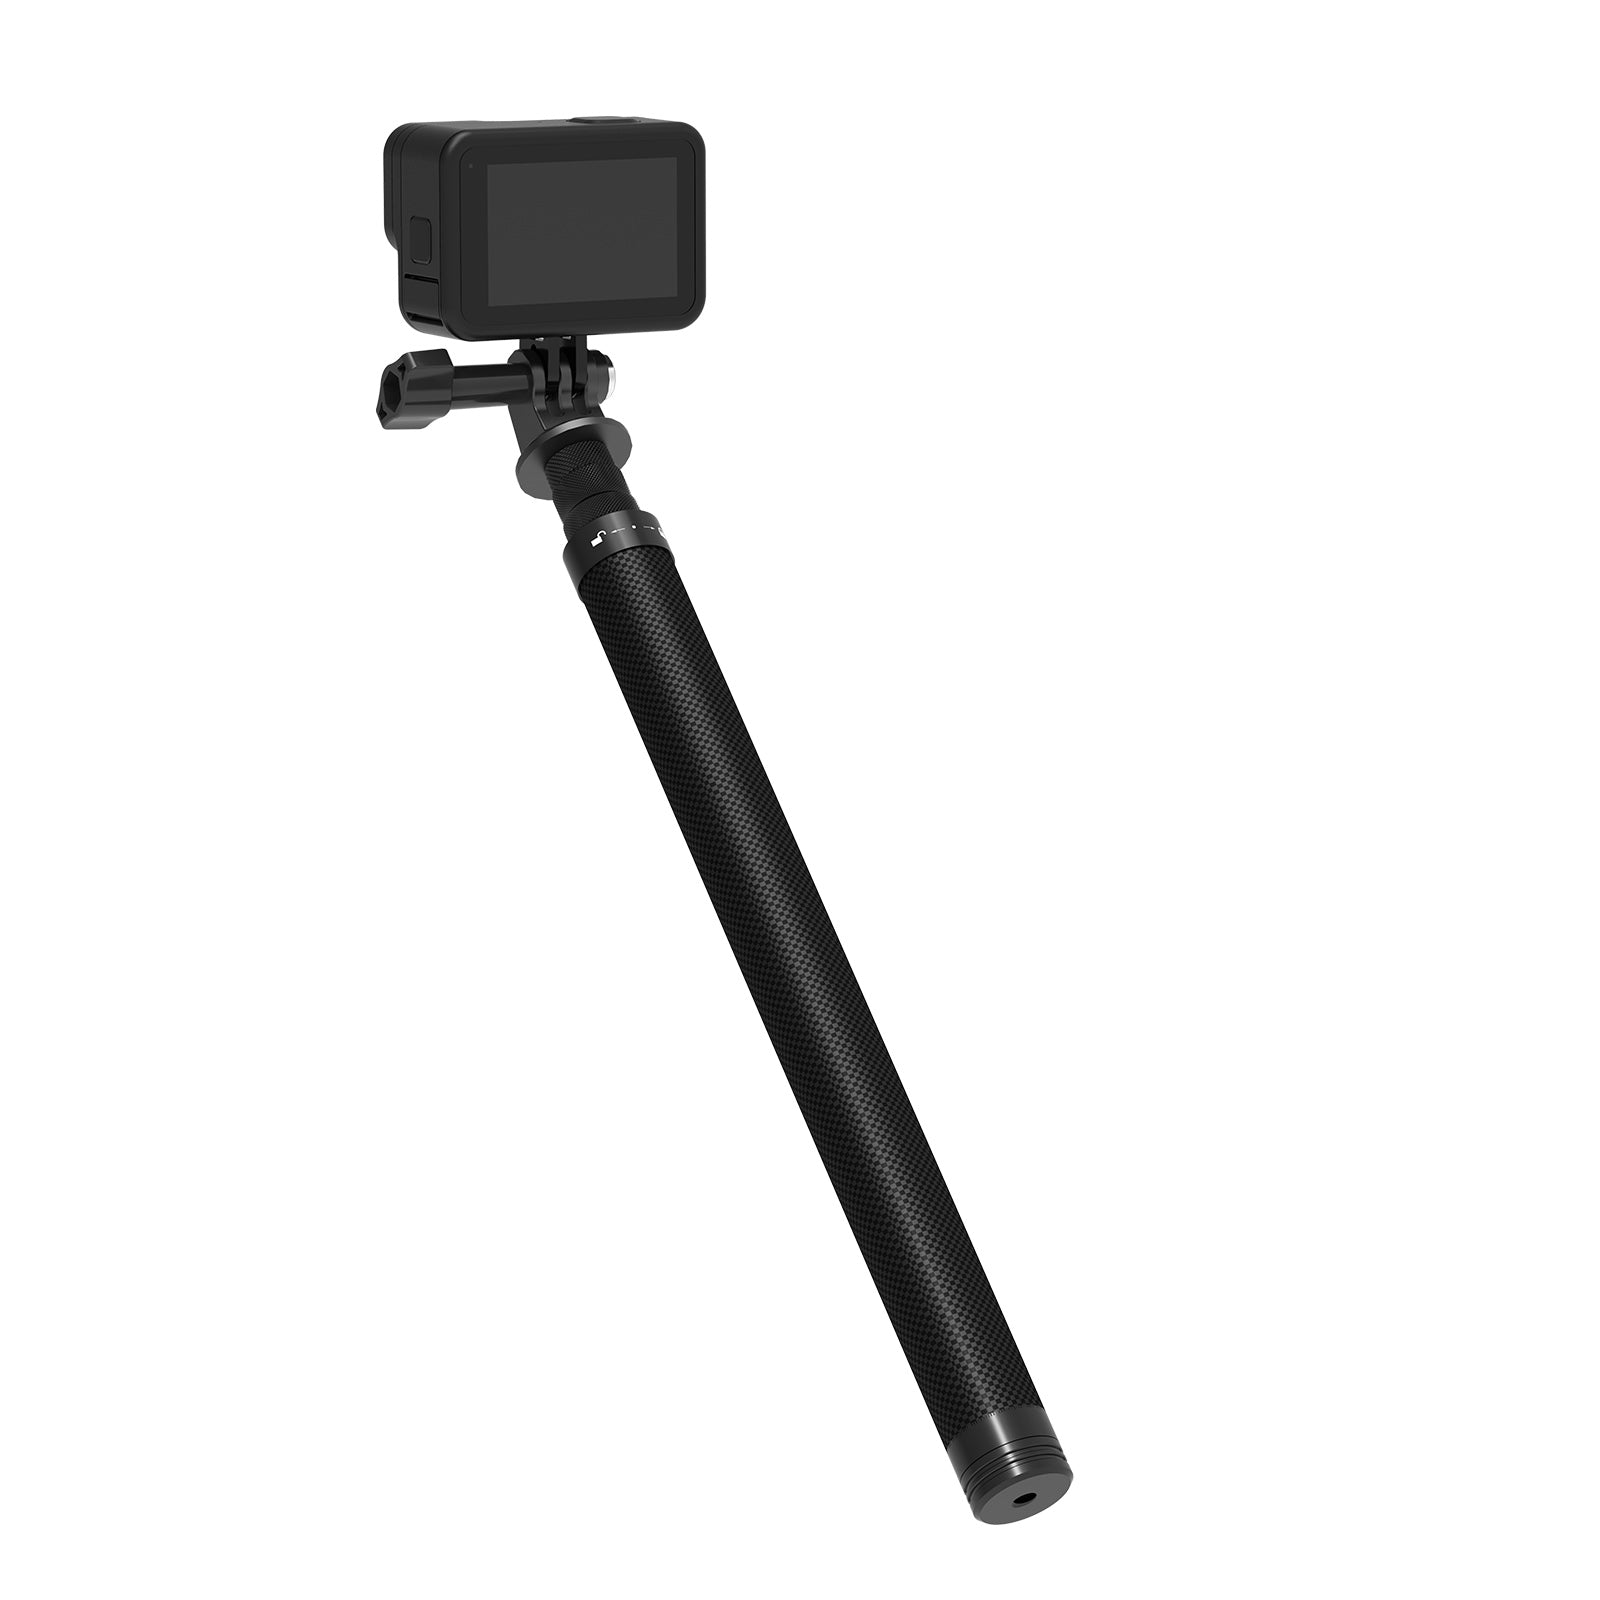 TELESIN 1.16m Carbon Fiber Selfie Stick - telesinstore